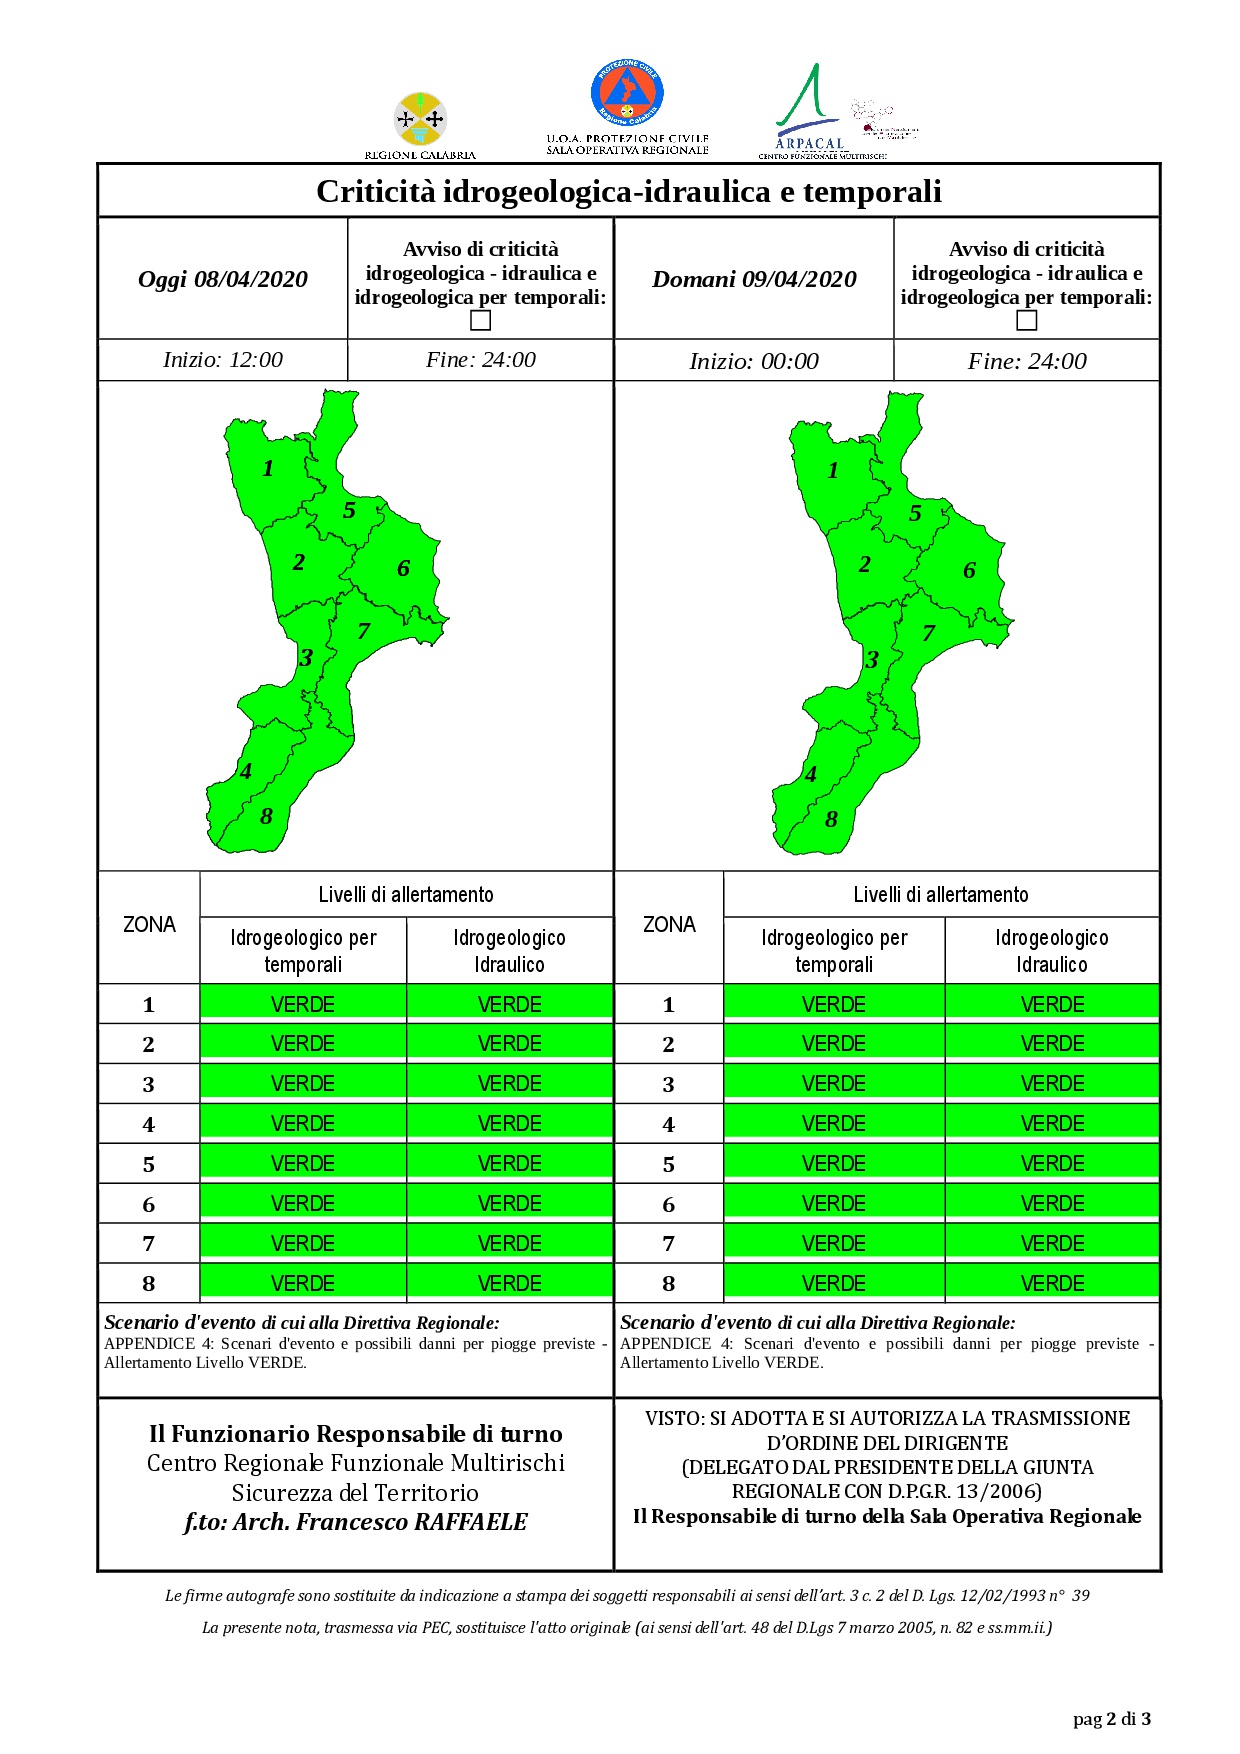 Criticità idrogeologica-idraulica e temporali in Calabria 08-04-2020